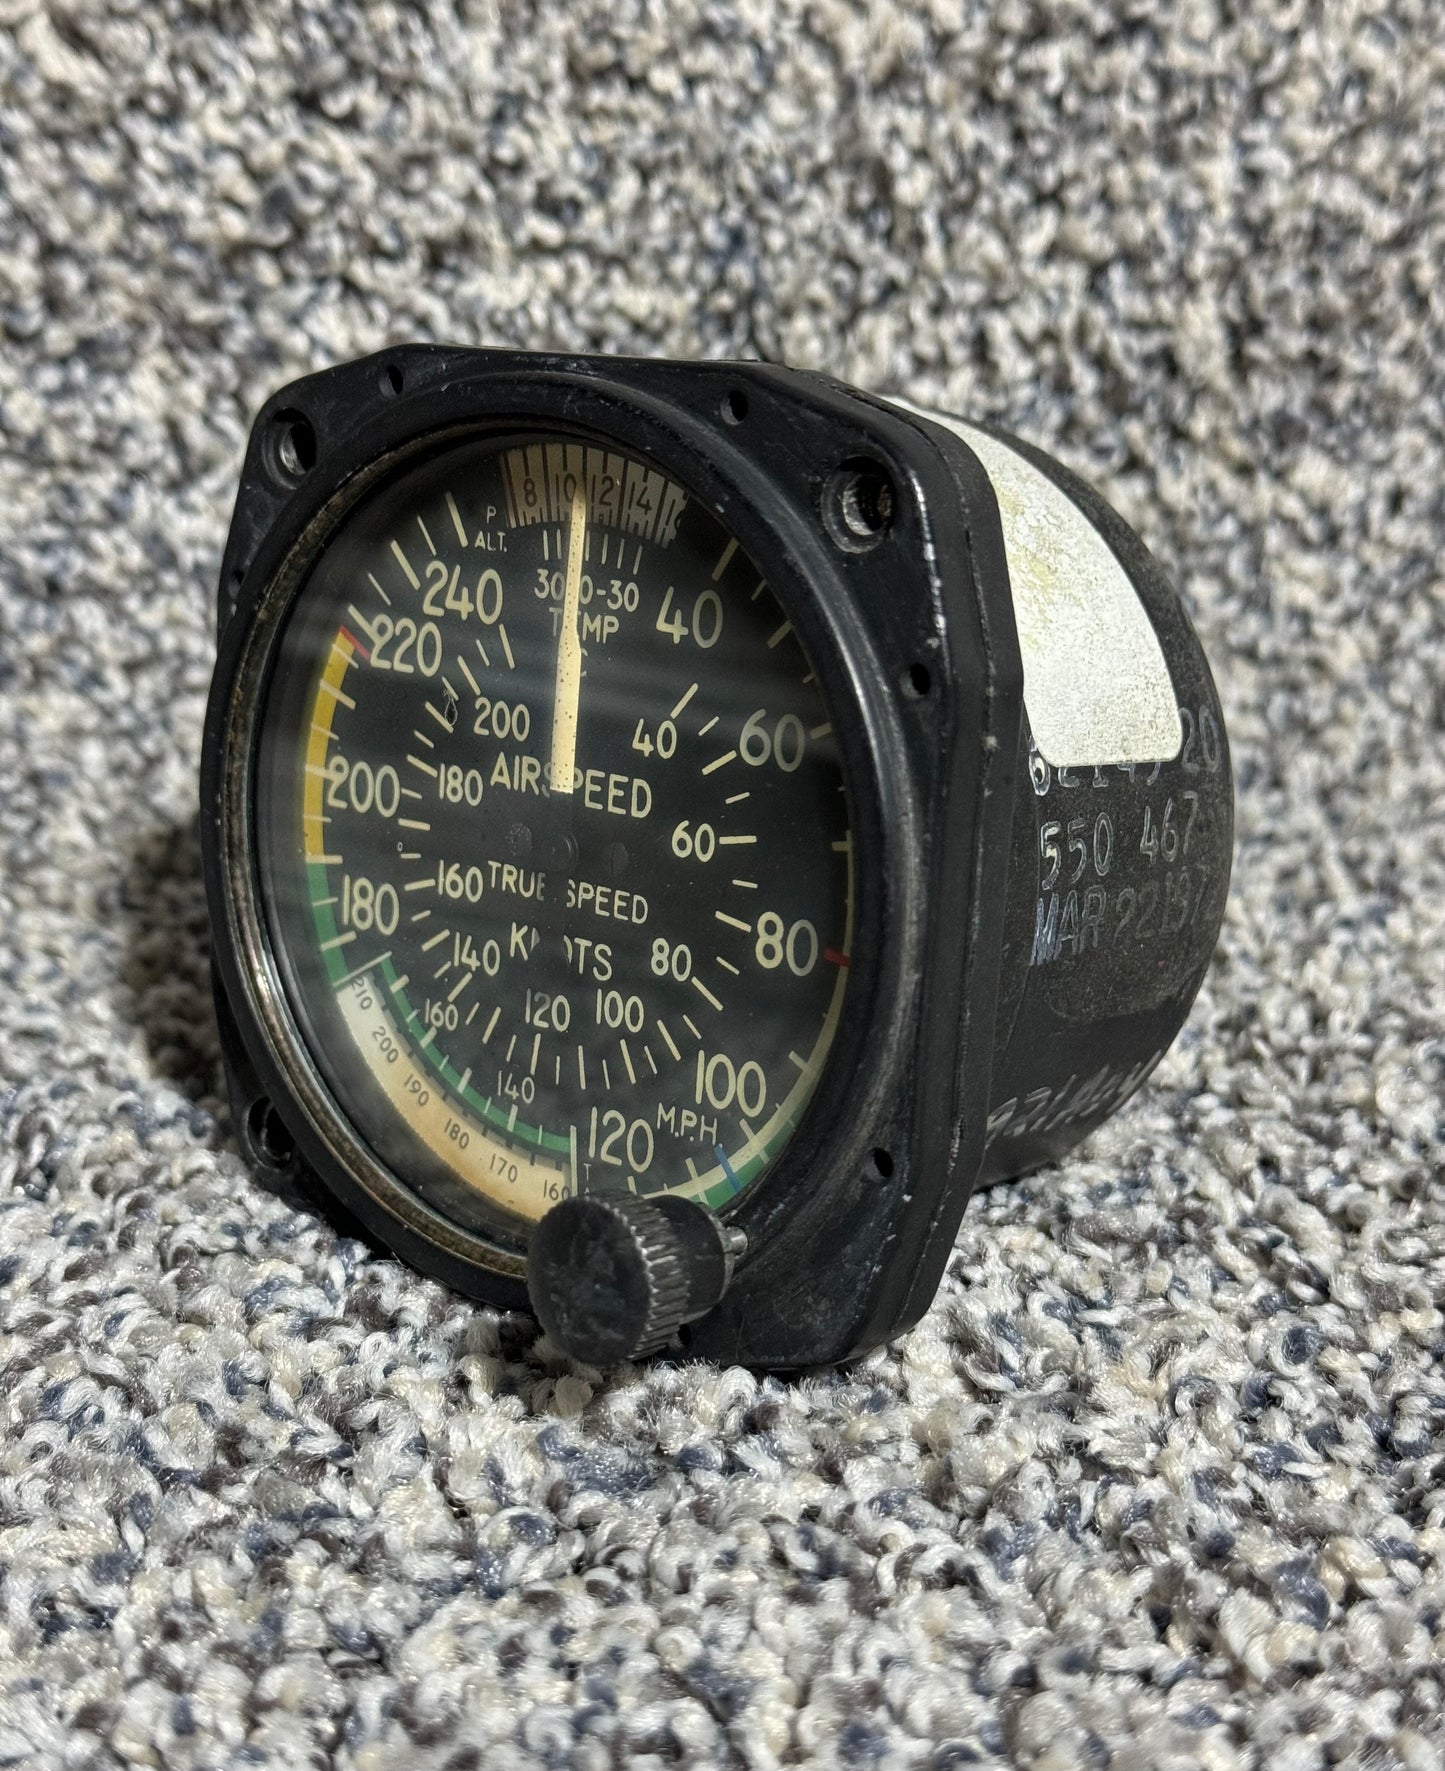 SA-46-1RB United Instruments True Airspeed Indicator